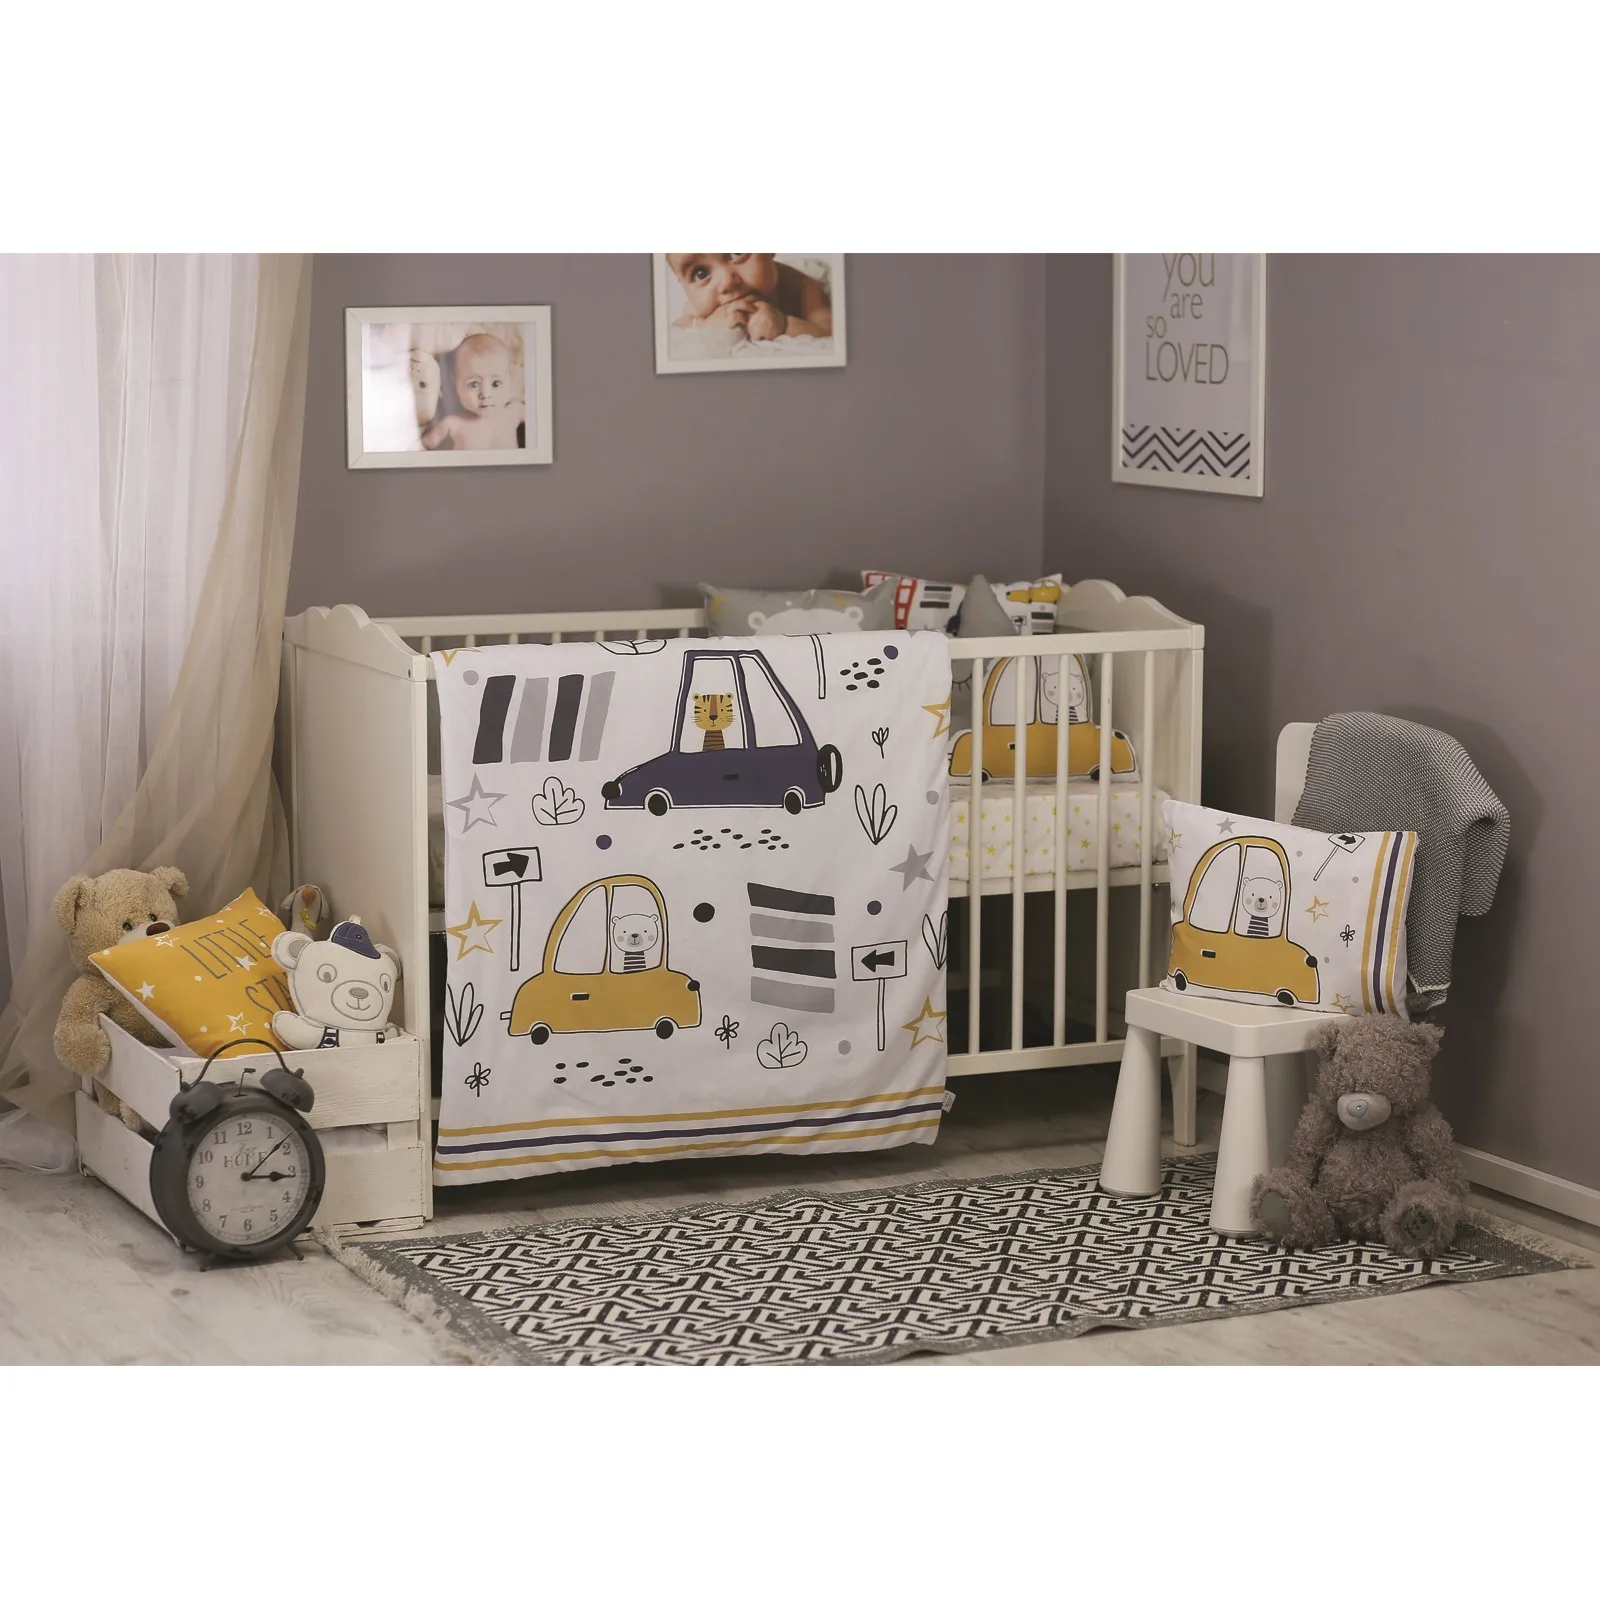 Ebebek Apolena Baby Cars Travel Cot Bed Sleep Cover 5 Pcs Set